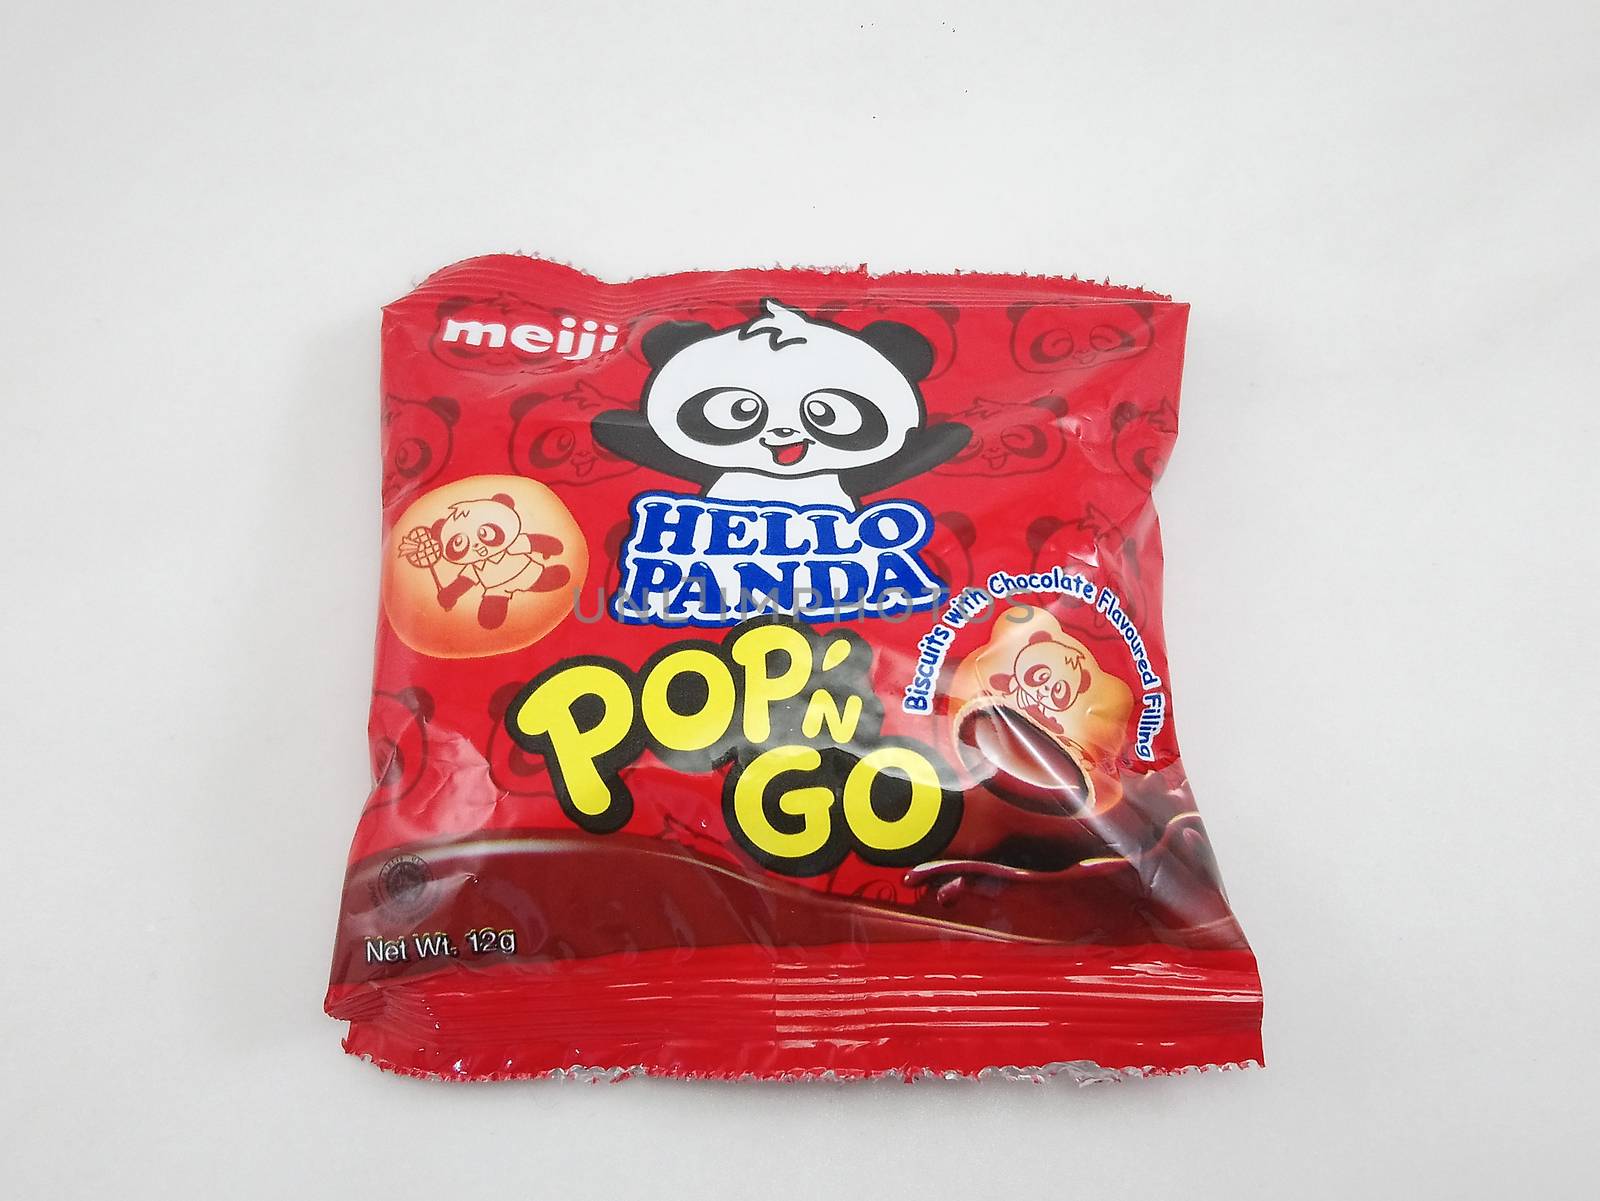 Meiji hello panda pop n go chocolate in Manila, Philippines by imwaltersy